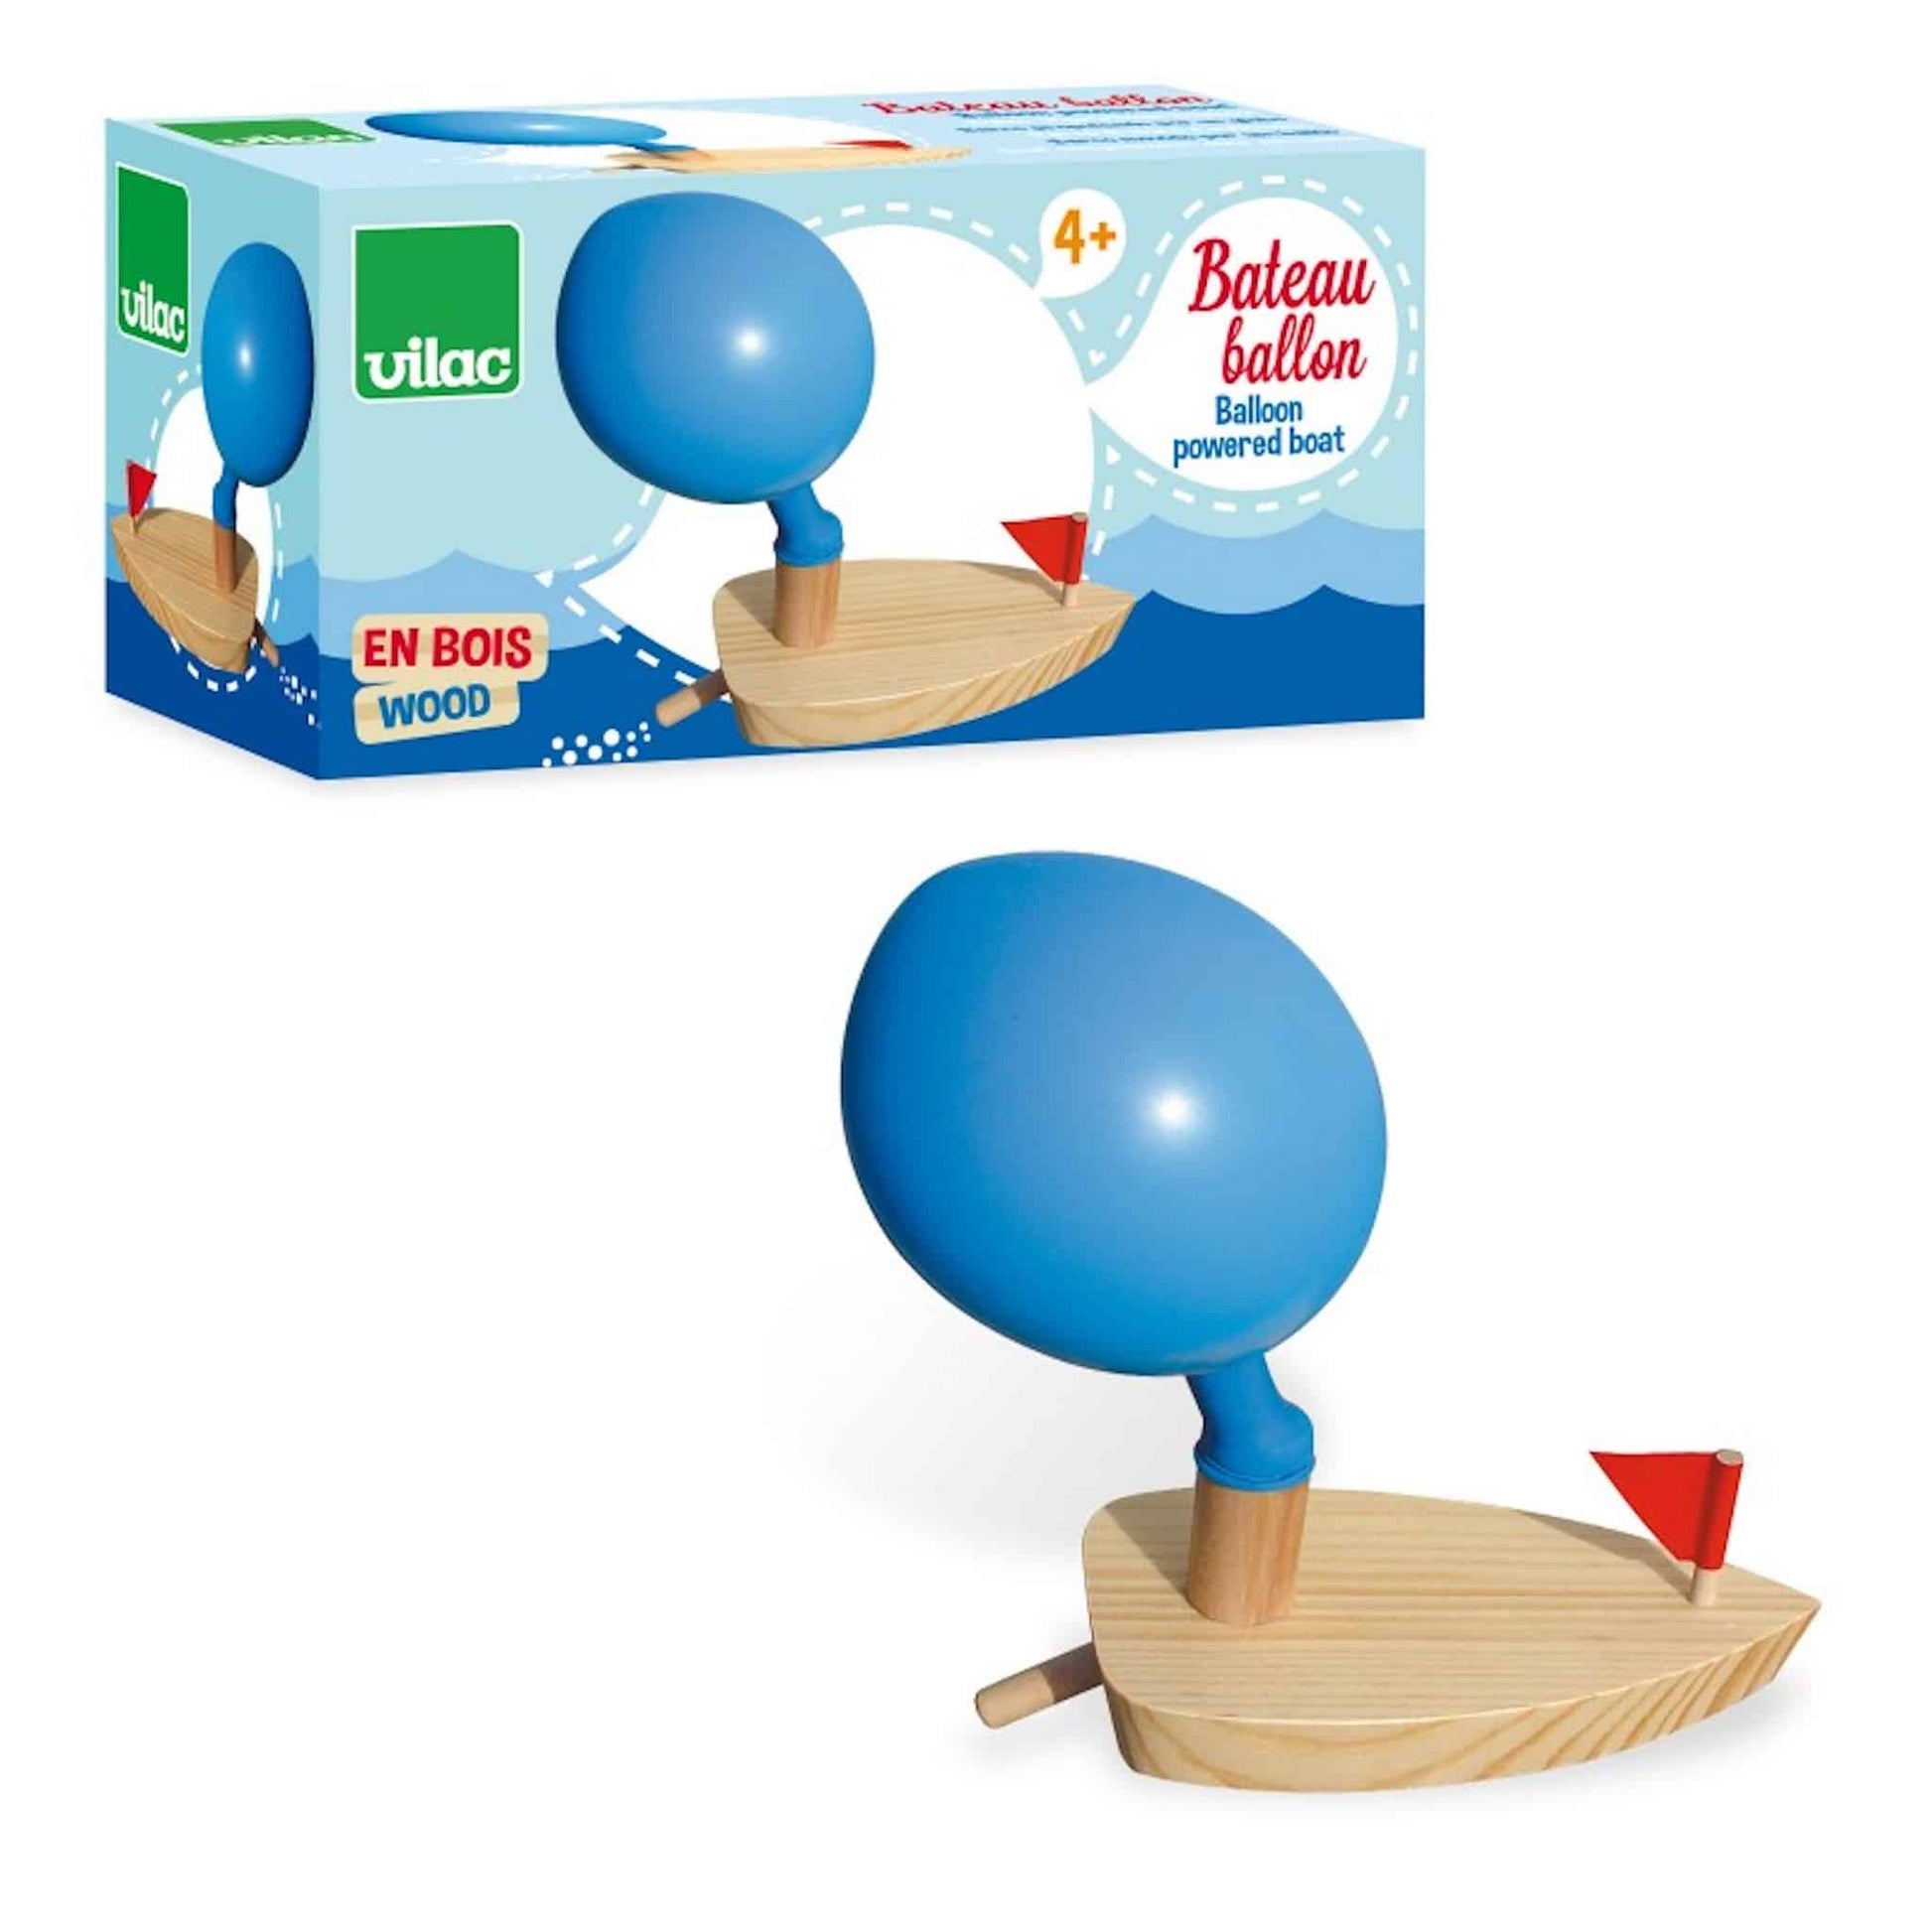 Vilac Balloon Powered Boat